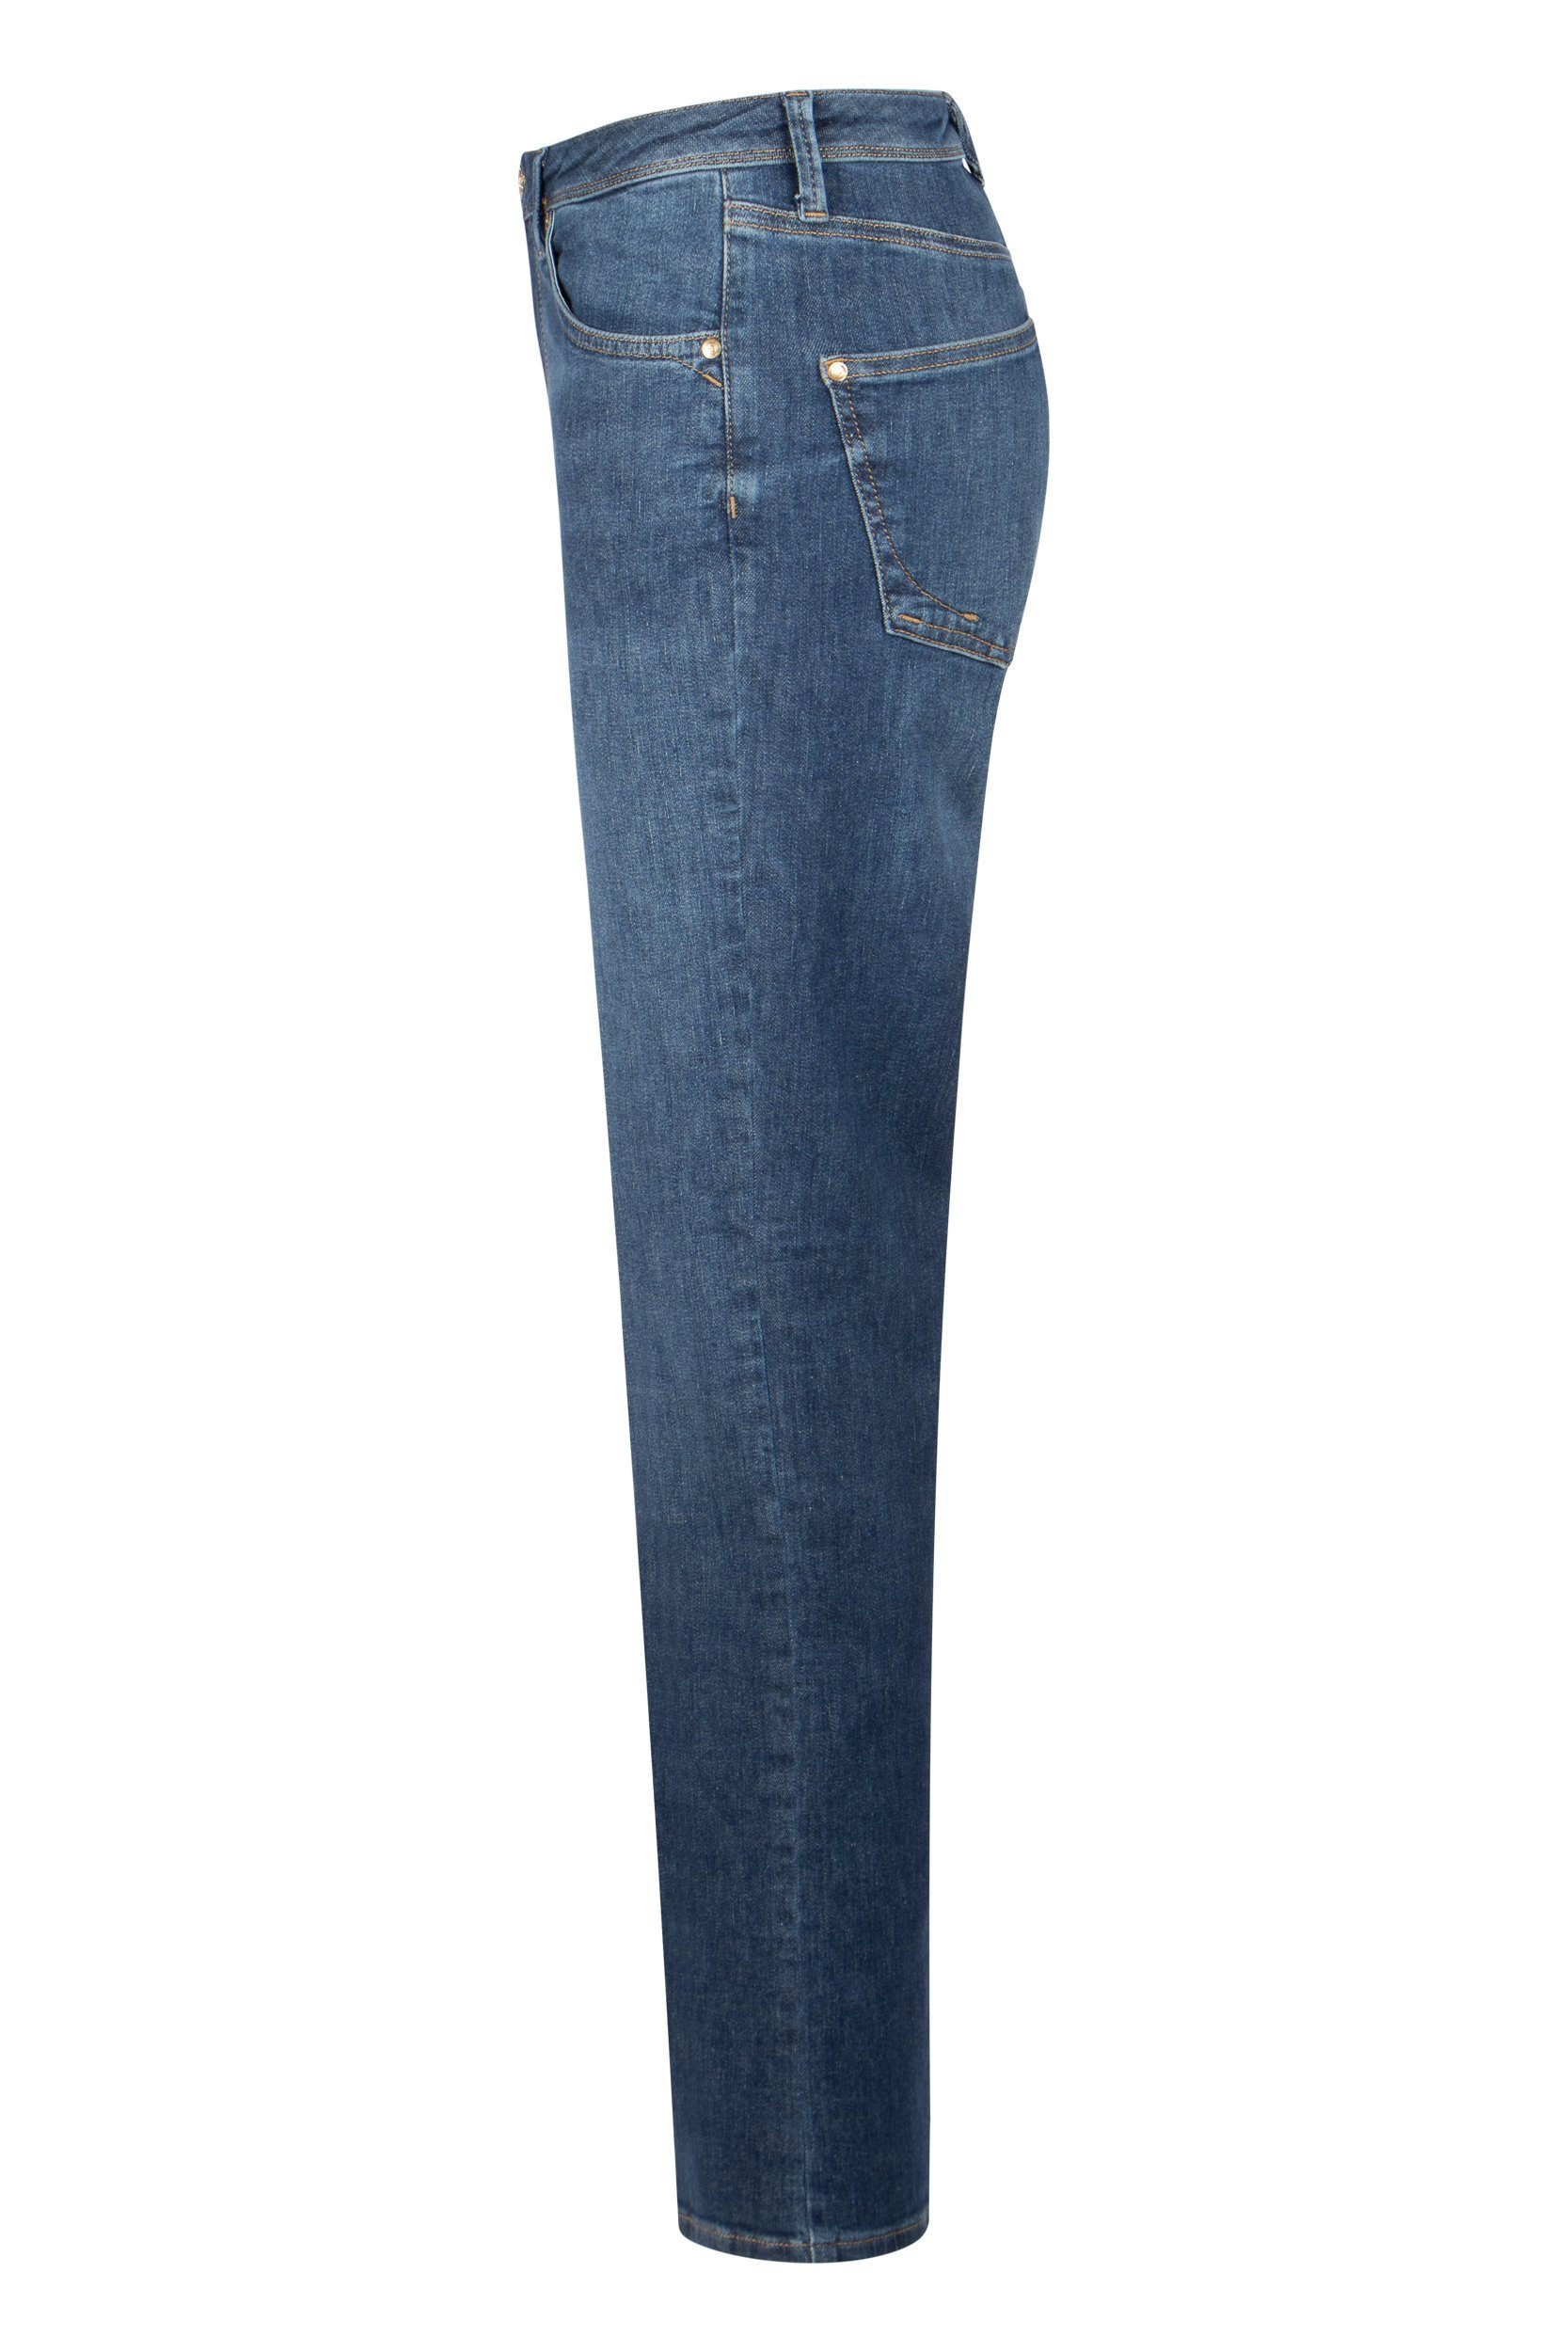 Raffaello Rossi Long B 5-Pocket-Jeans Kira